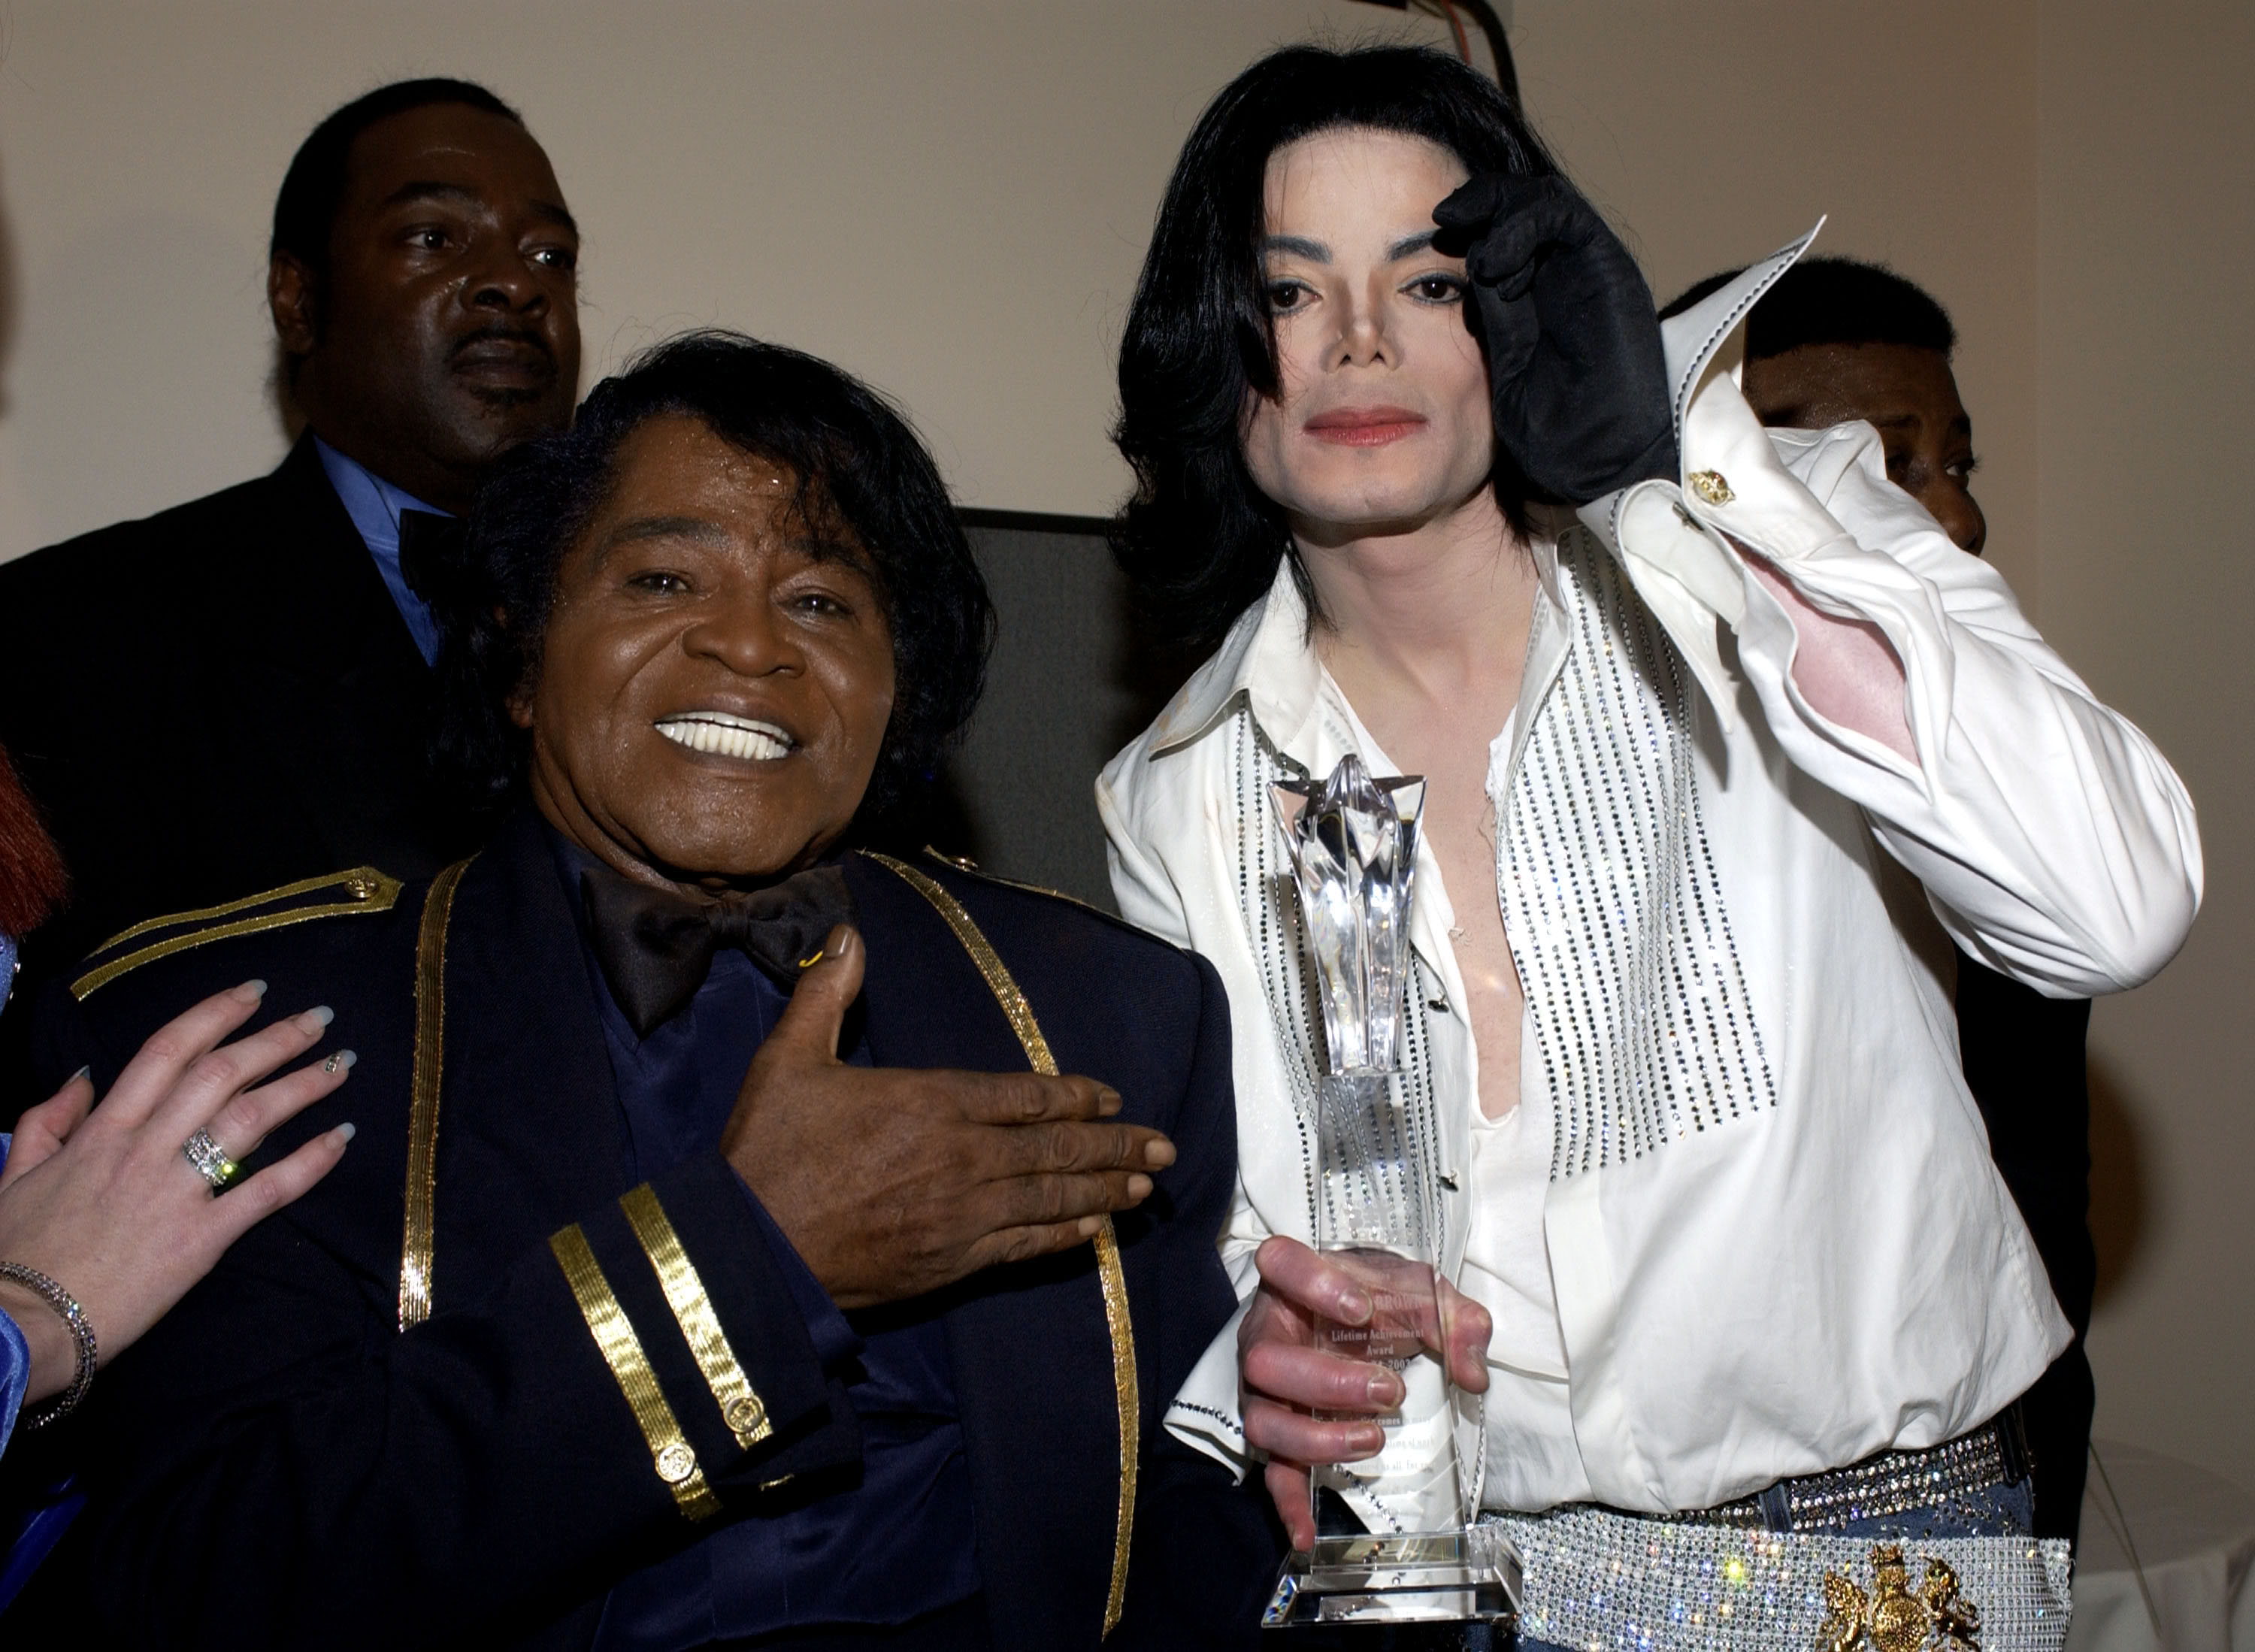 Michael and James Brown BET awards 2003 - Michael Jackson Photo (36594758) - Fanpop